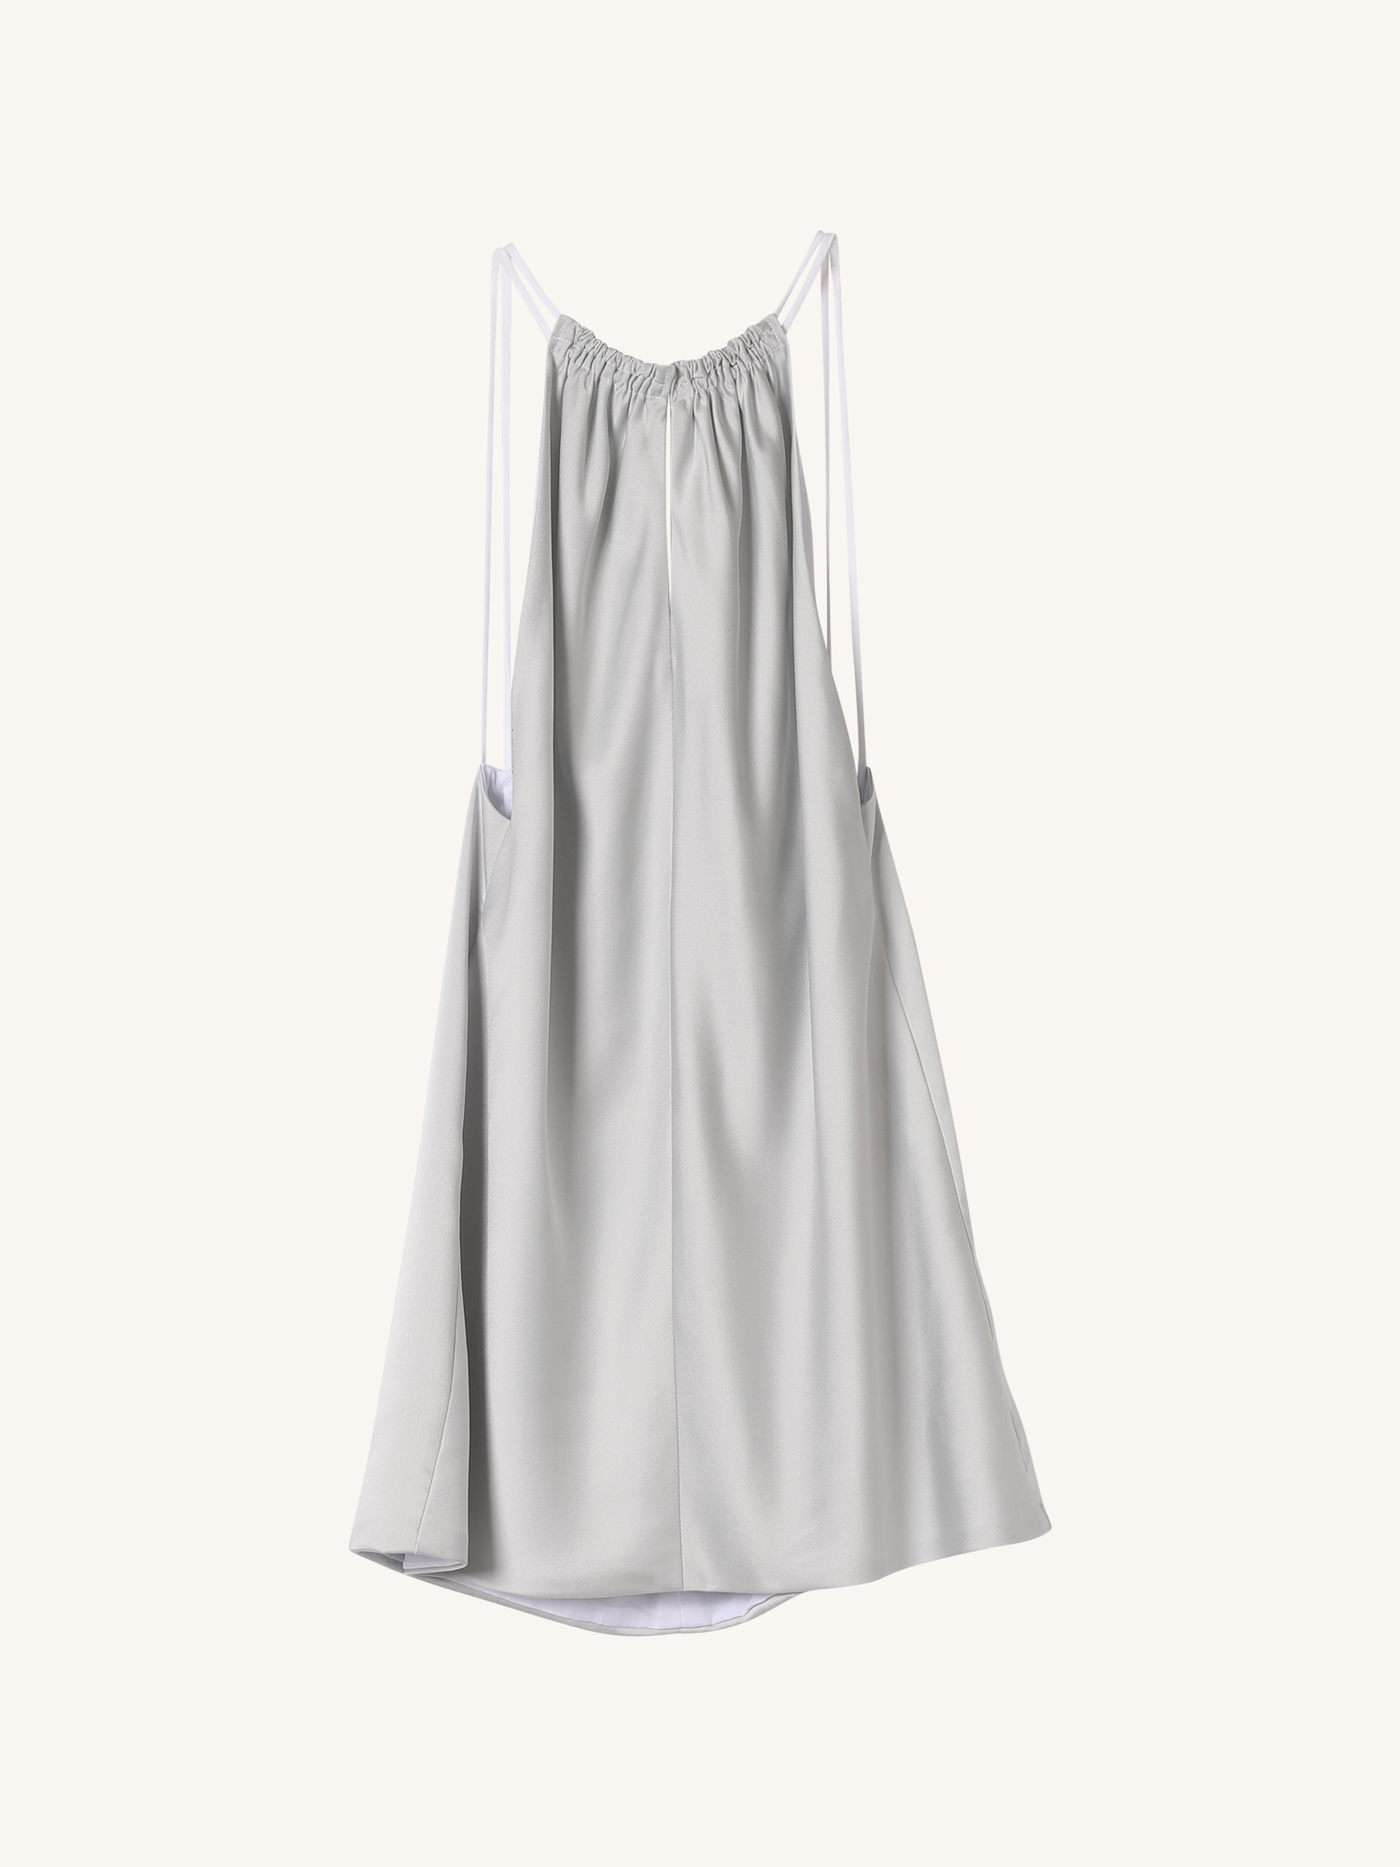 Morgan Dress in Silver